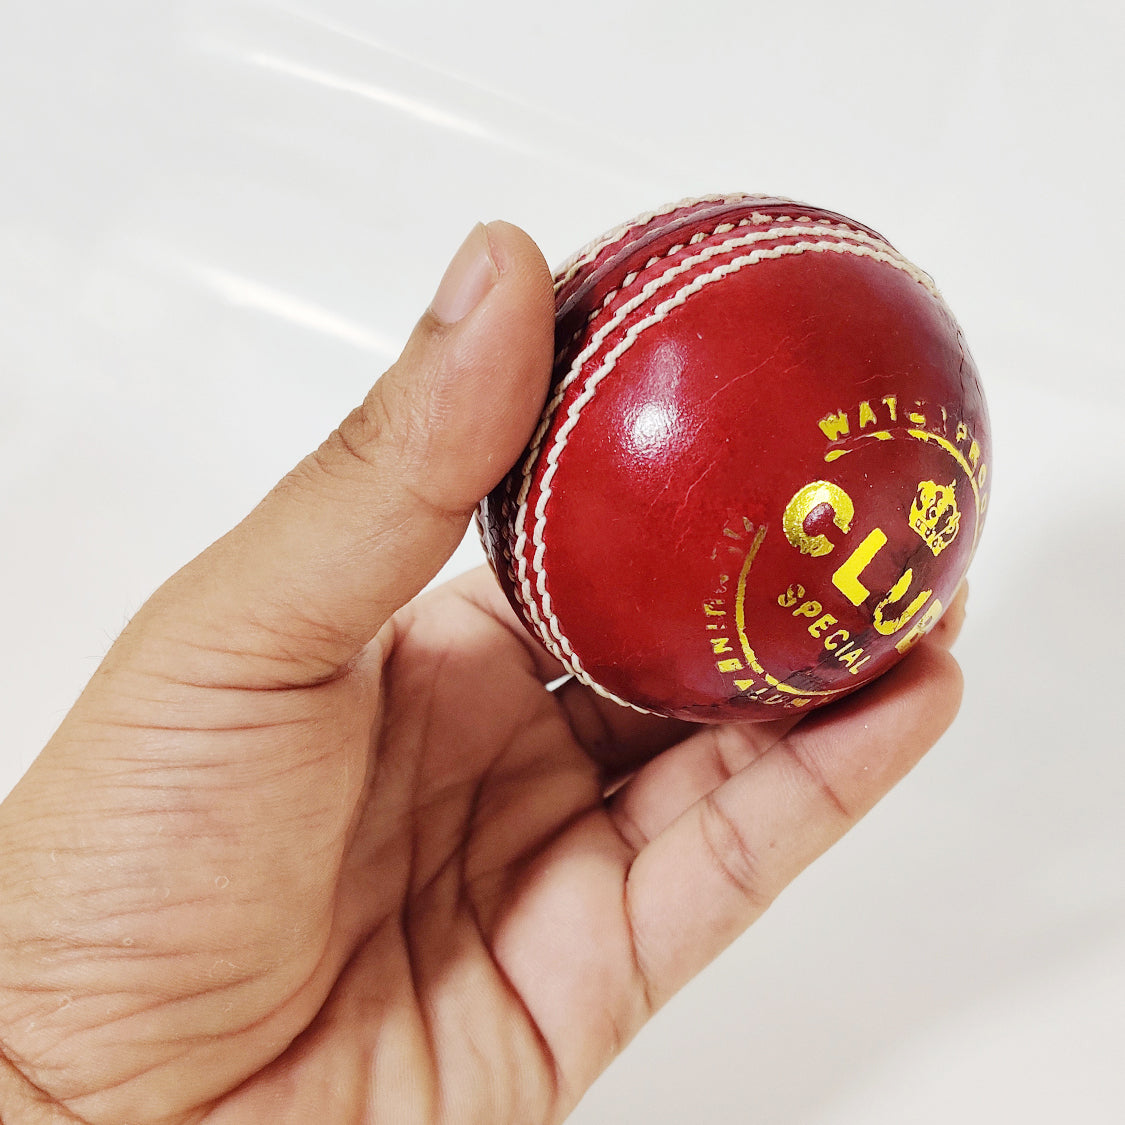 Prokick Club Four Piece Leather Cricket Ball, 12 Pc (Red) - Best Price online Prokicksports.com